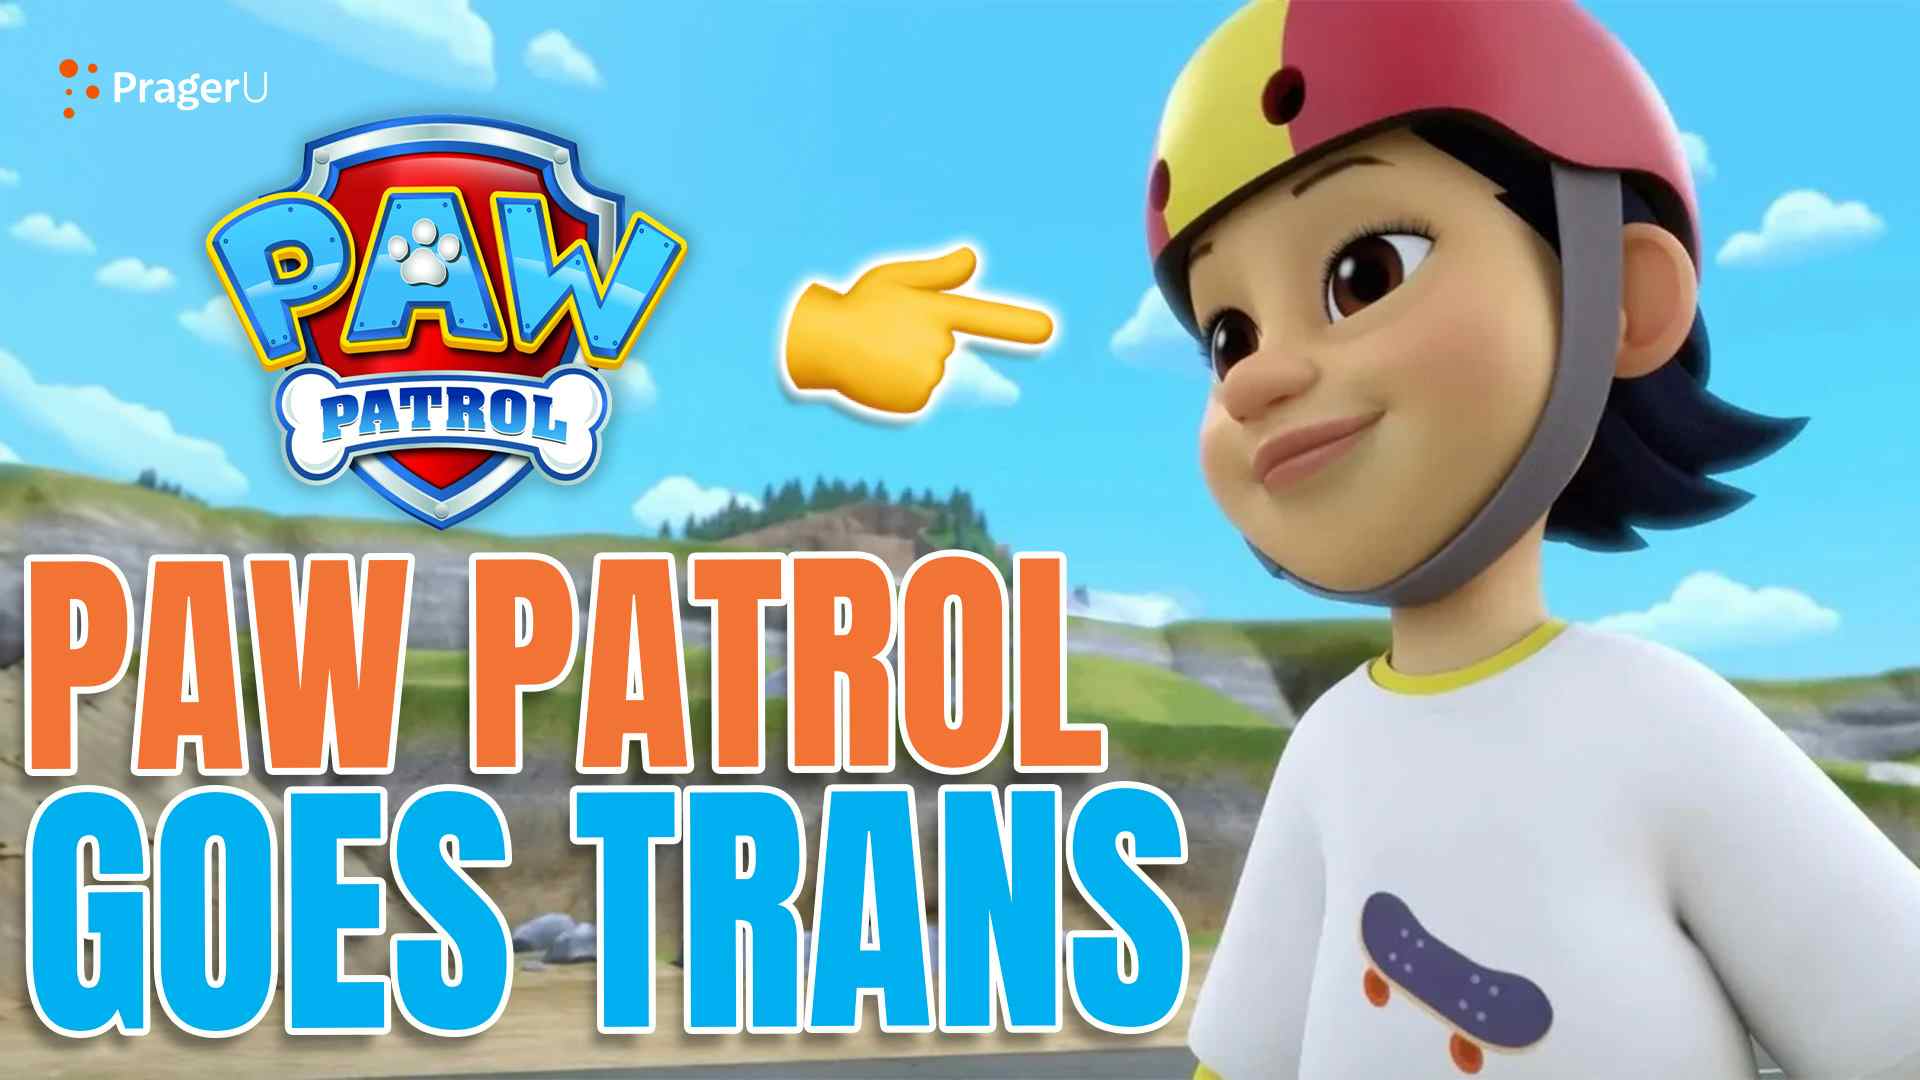 Popular Children's Show Pushes Trans Agenda